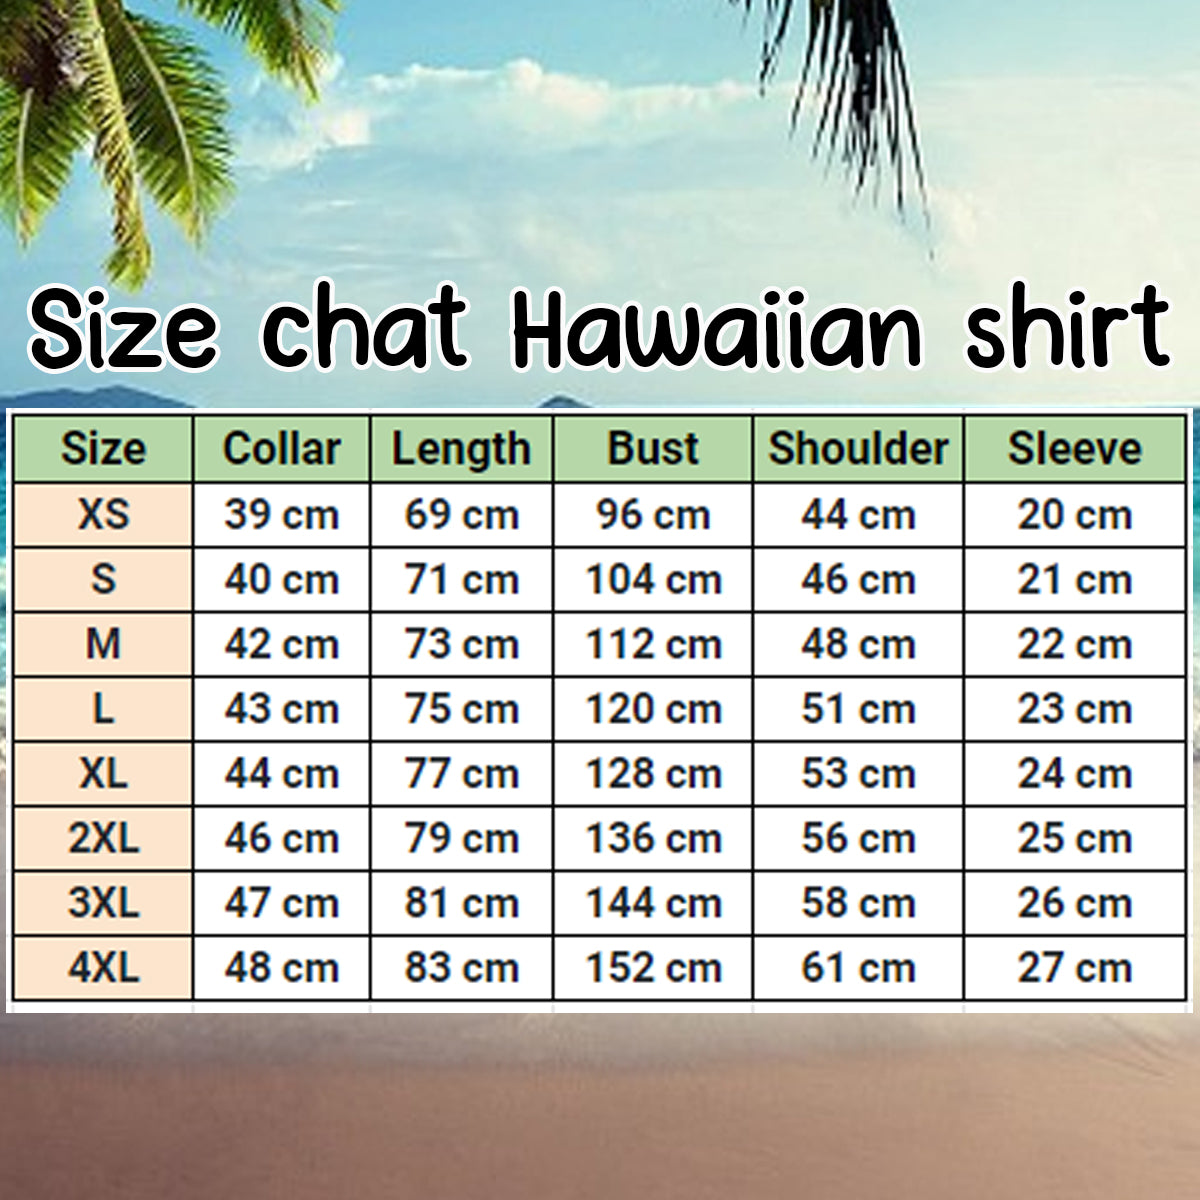 Cow Floral Colorful Hawaiian Shirt/ Hawaii Shirt Men/ Aloha Shirt/ Tropical Sleeve Summer